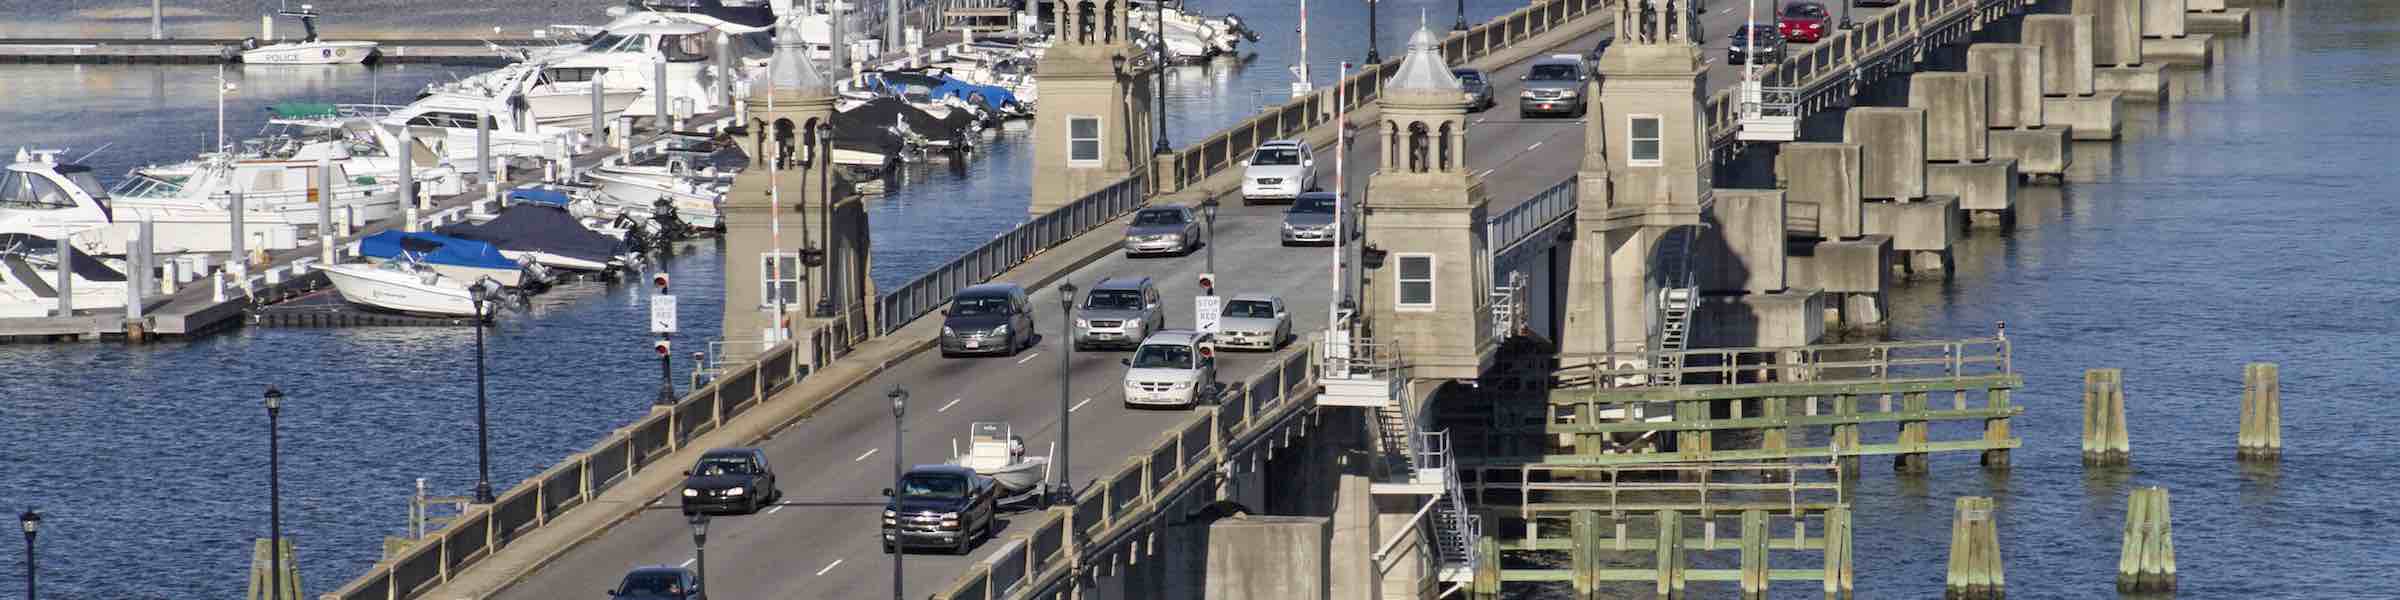 Road traffic bridge crossing the Ashley River into peninsular Charleston, SC